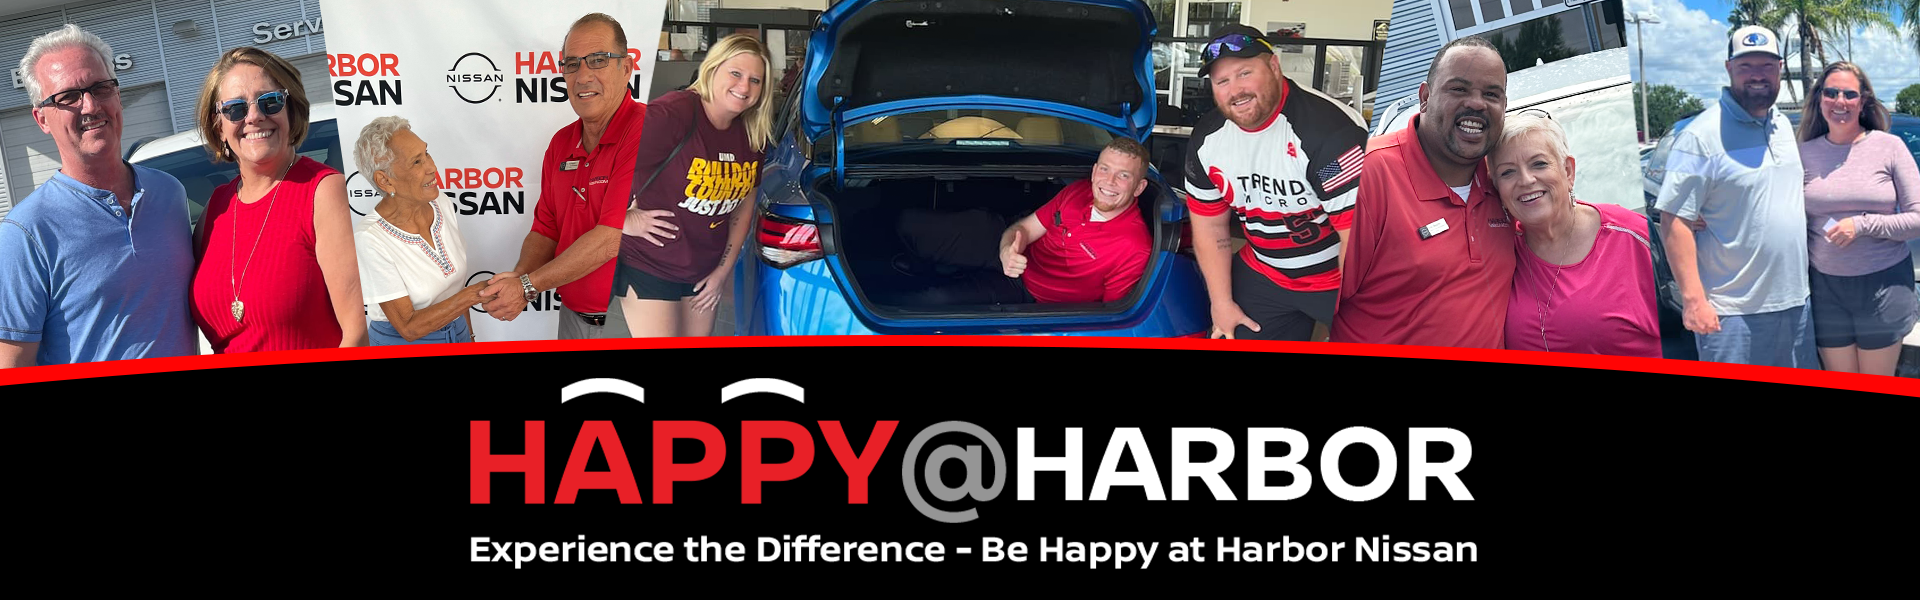 Be happy at Harbor Nissan!